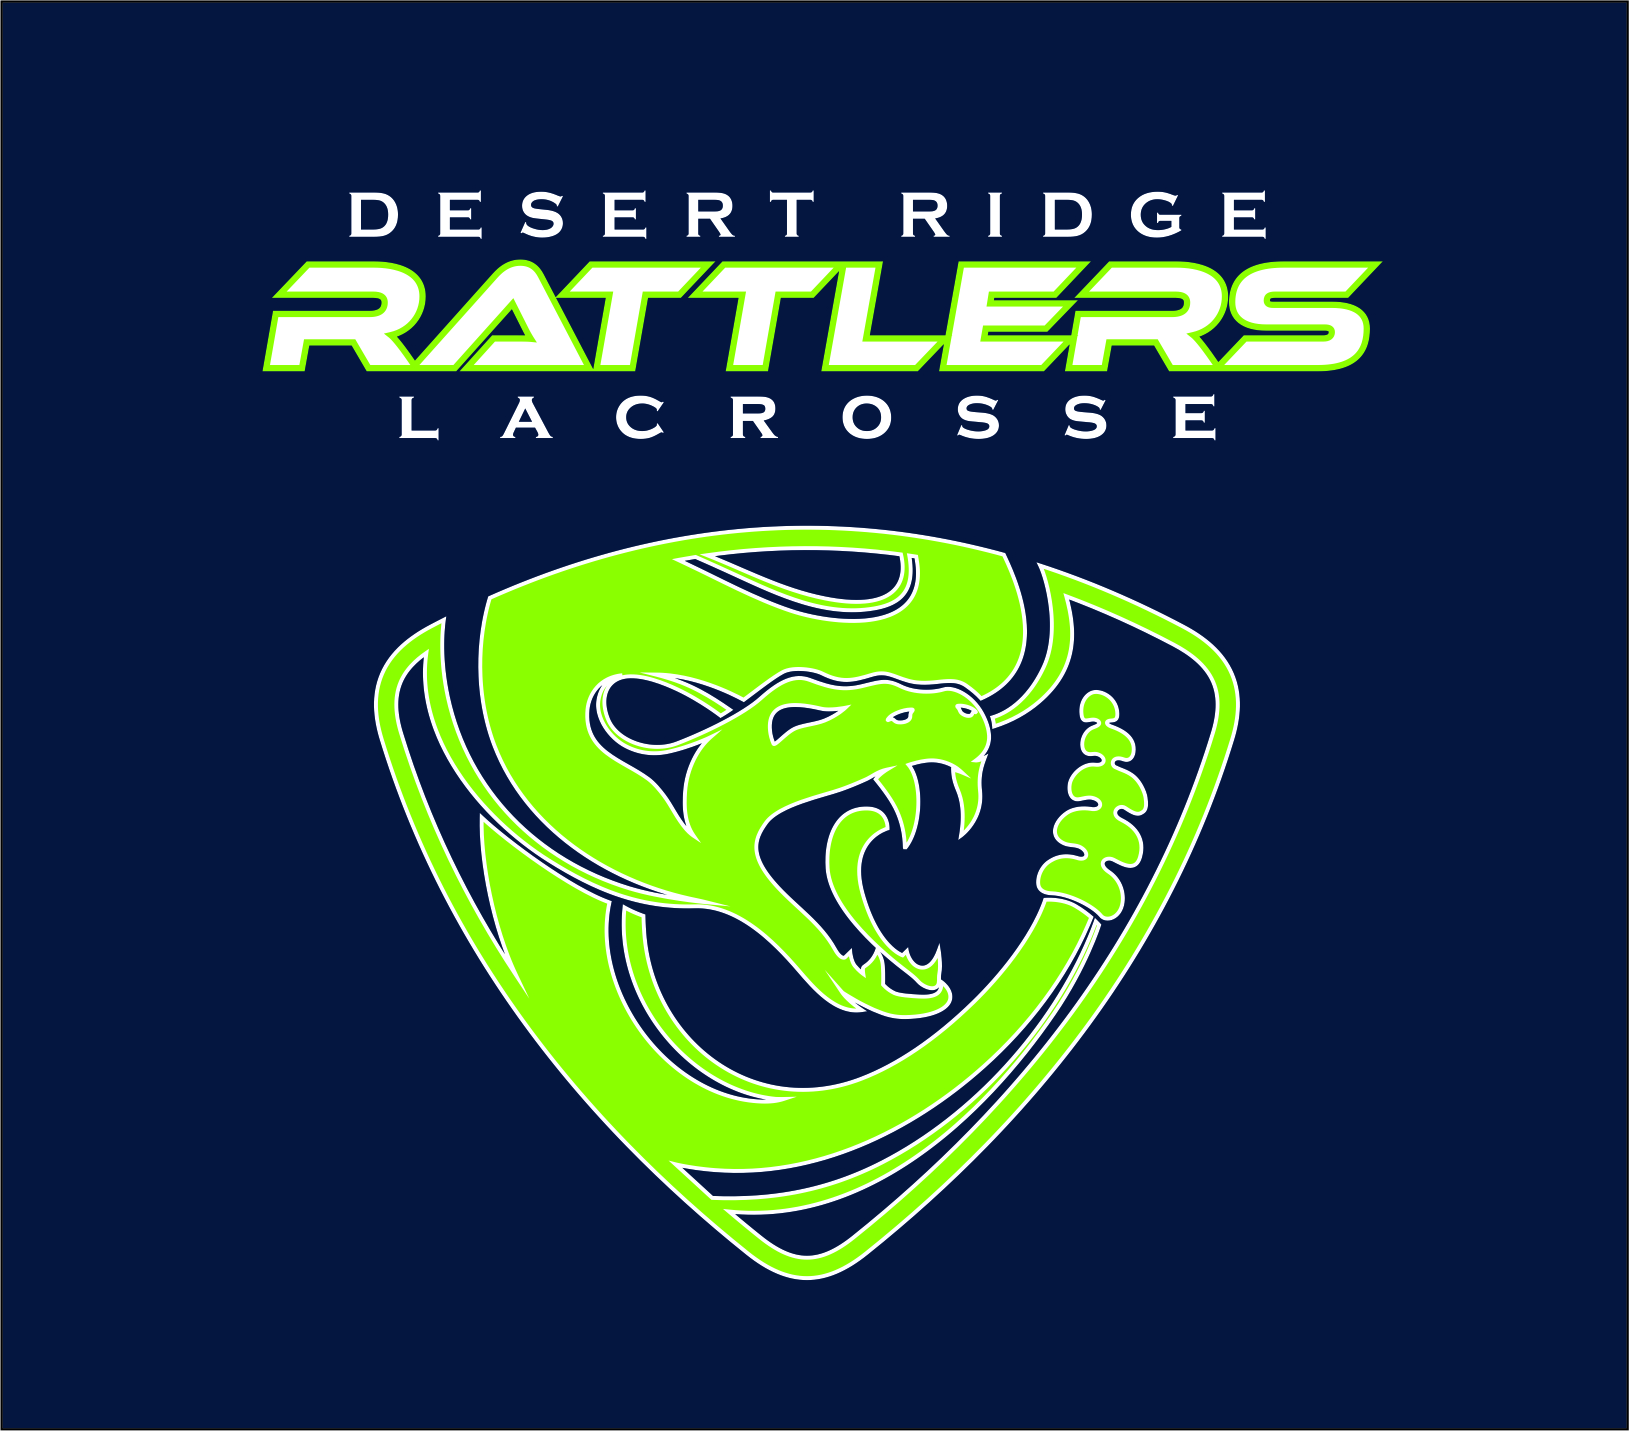  Desert Rattlers Lacrosse 